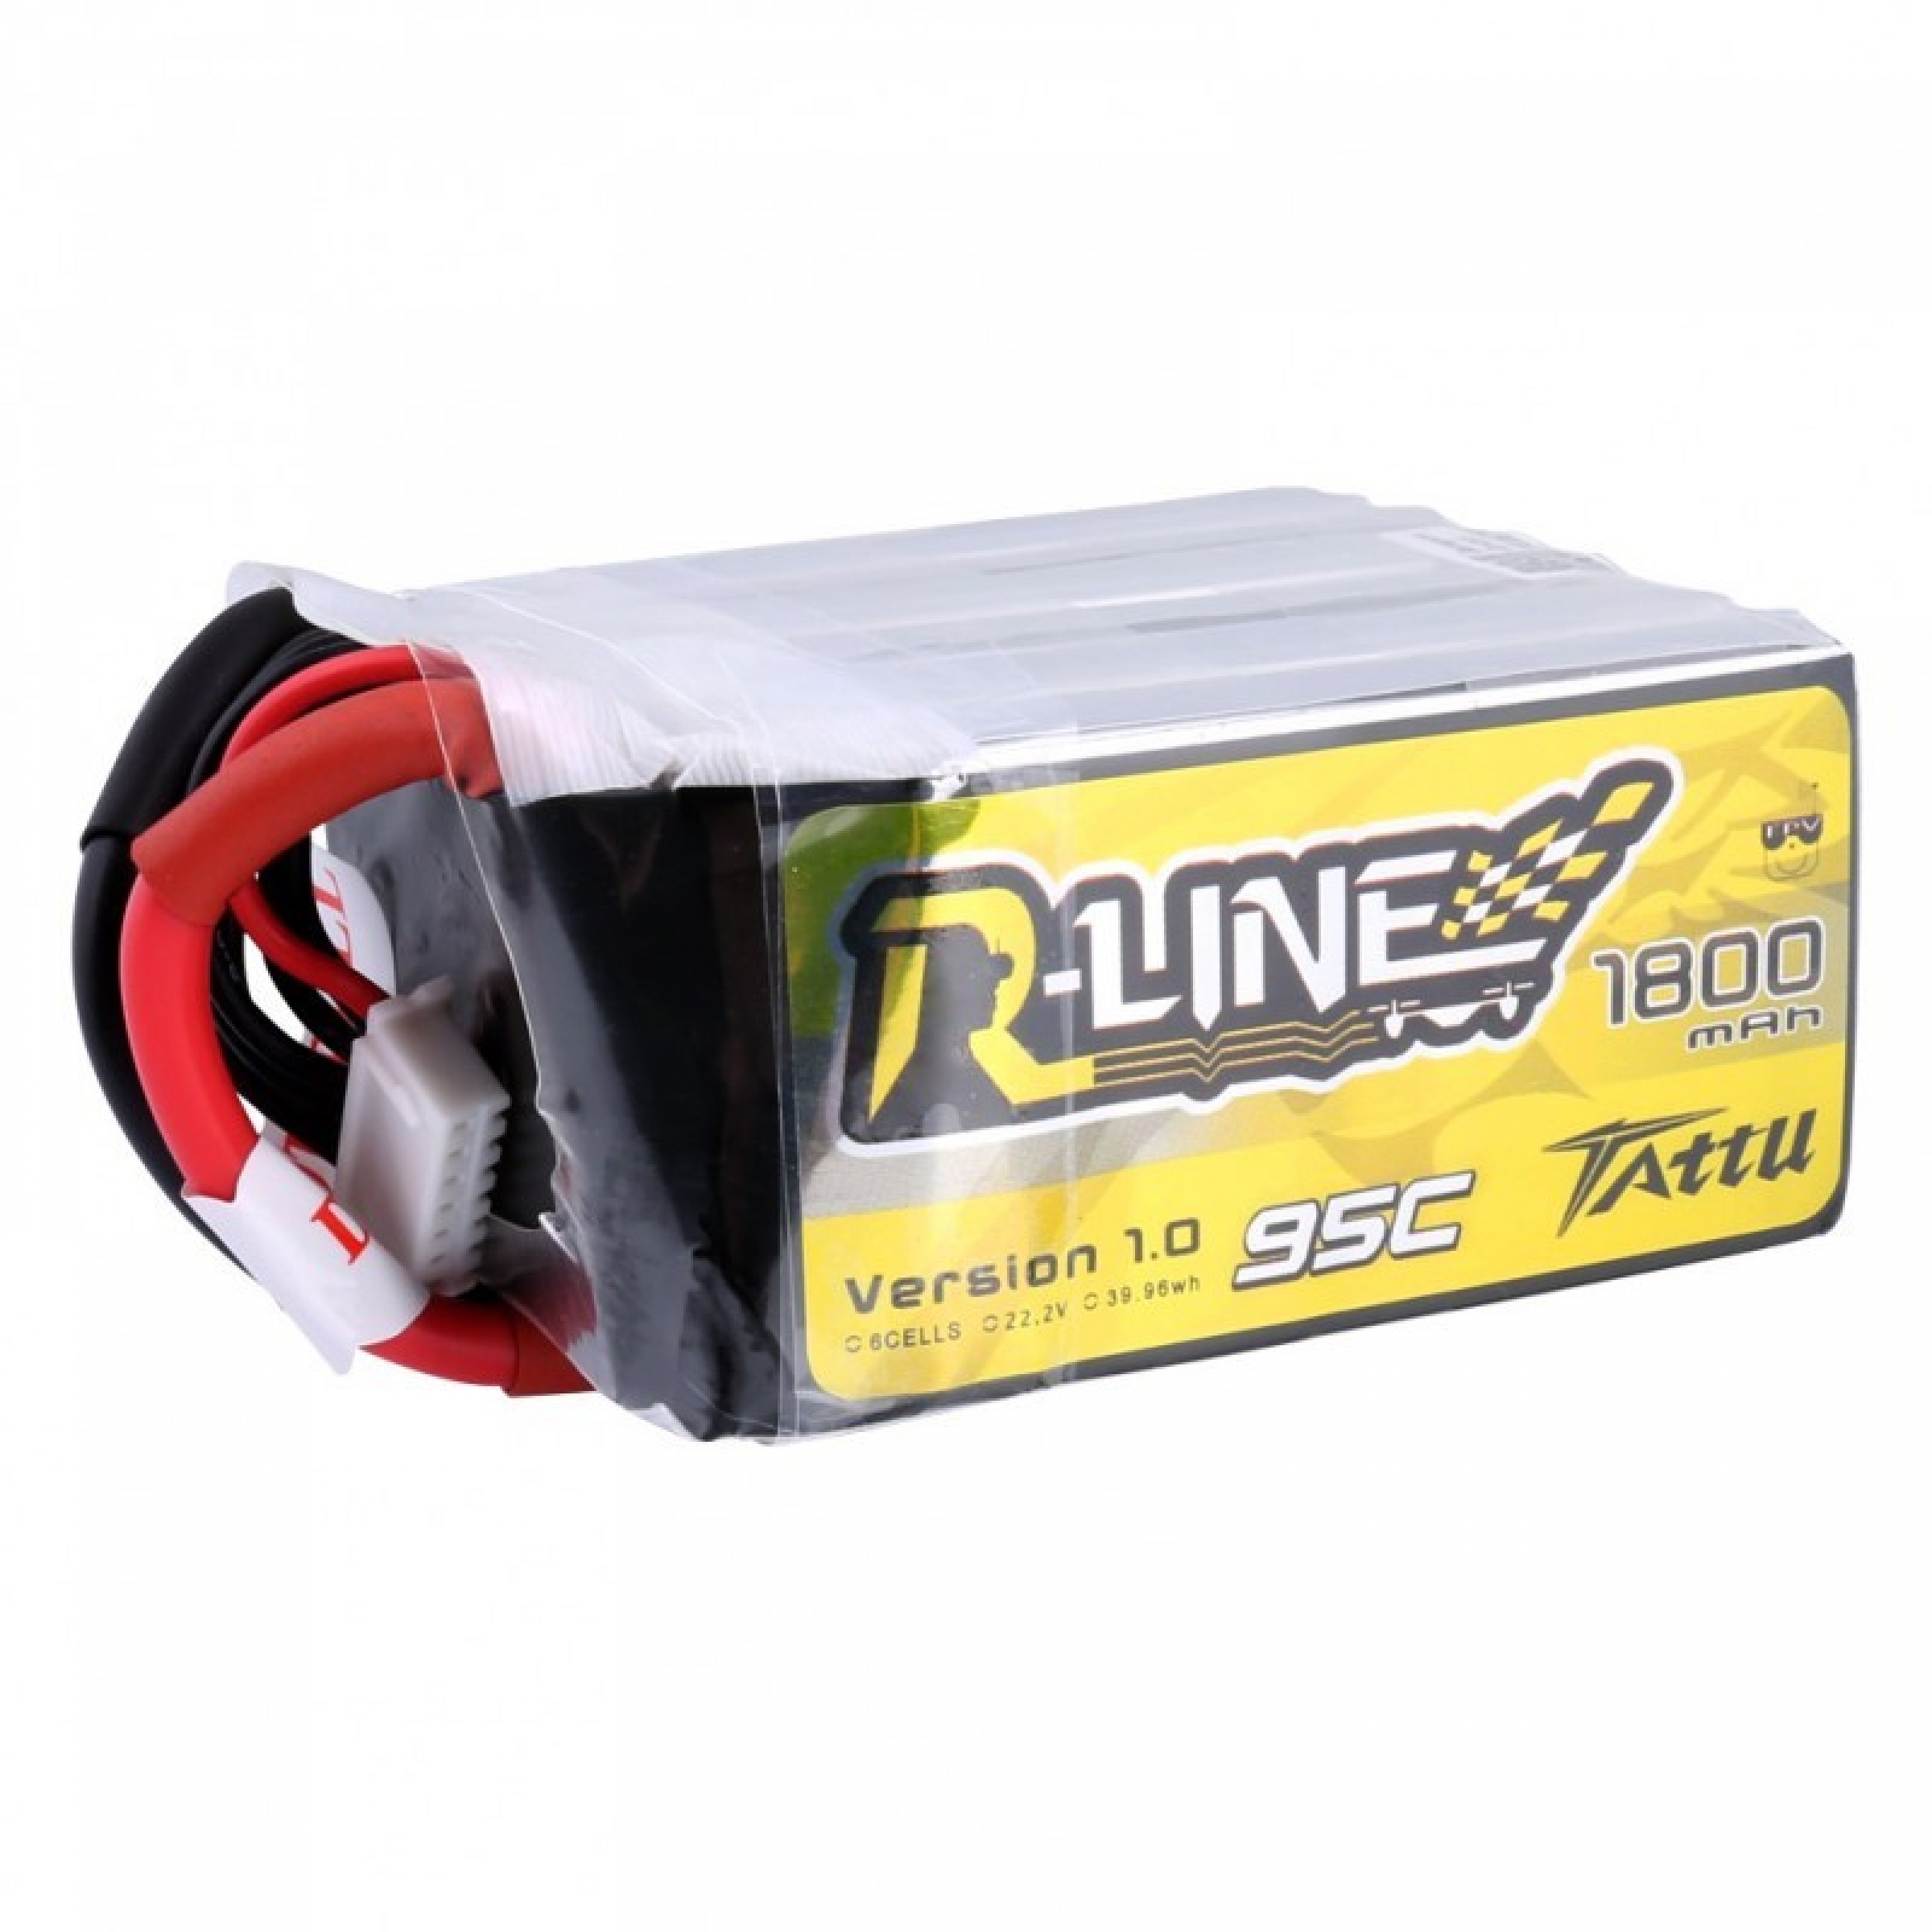 TATTU R-line 1800mAh 14.8V 95C 4S1P Lipo Battery Pack with XT60 Plug